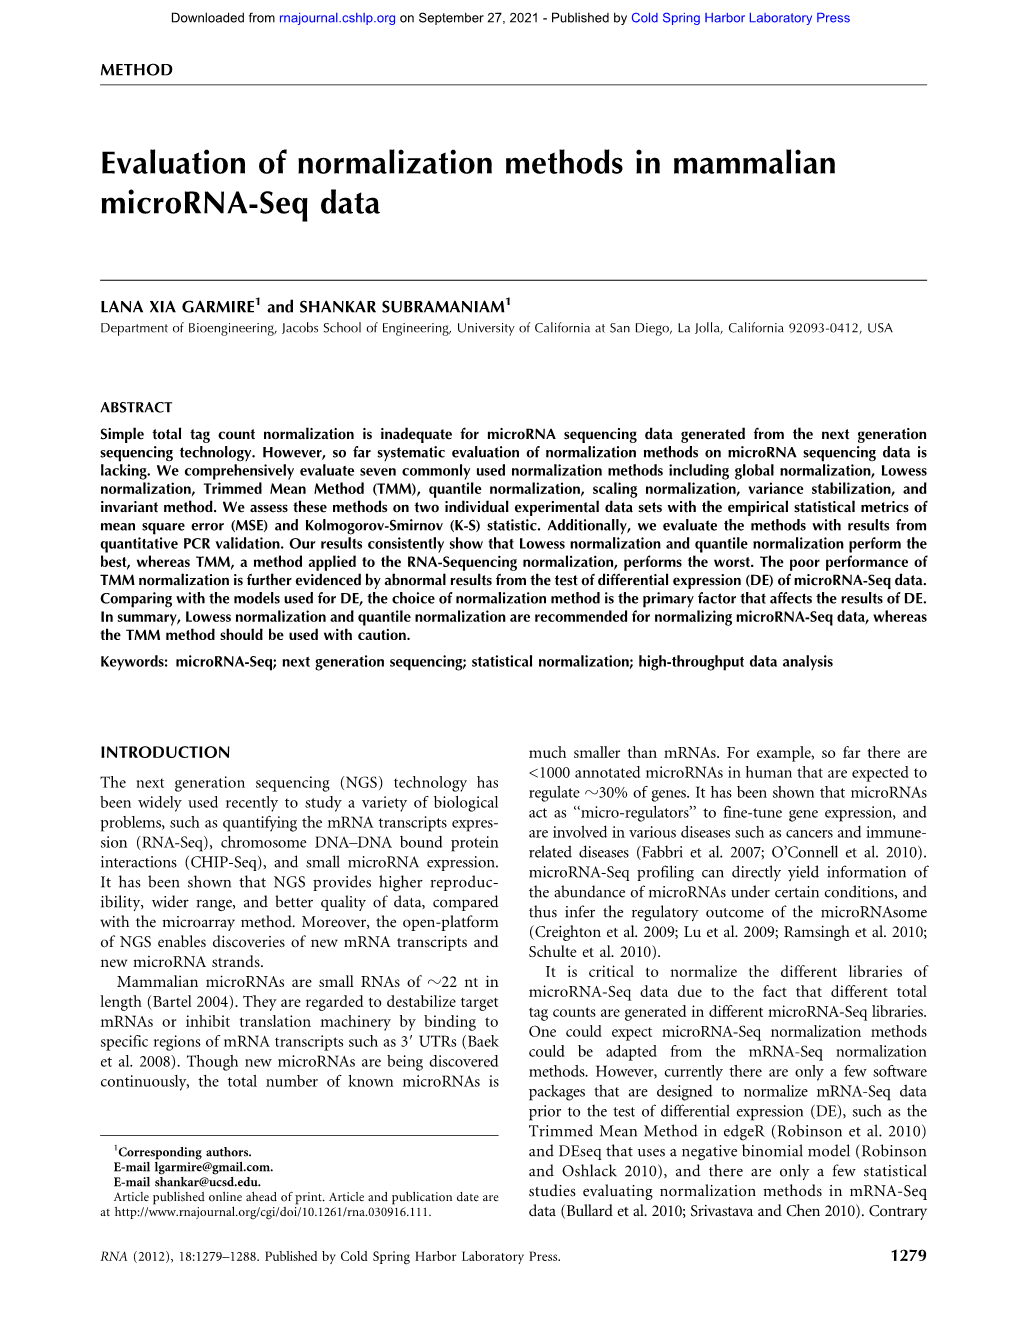 Evaluation of Normalization Methods in Mammalian Microrna-Seq Data